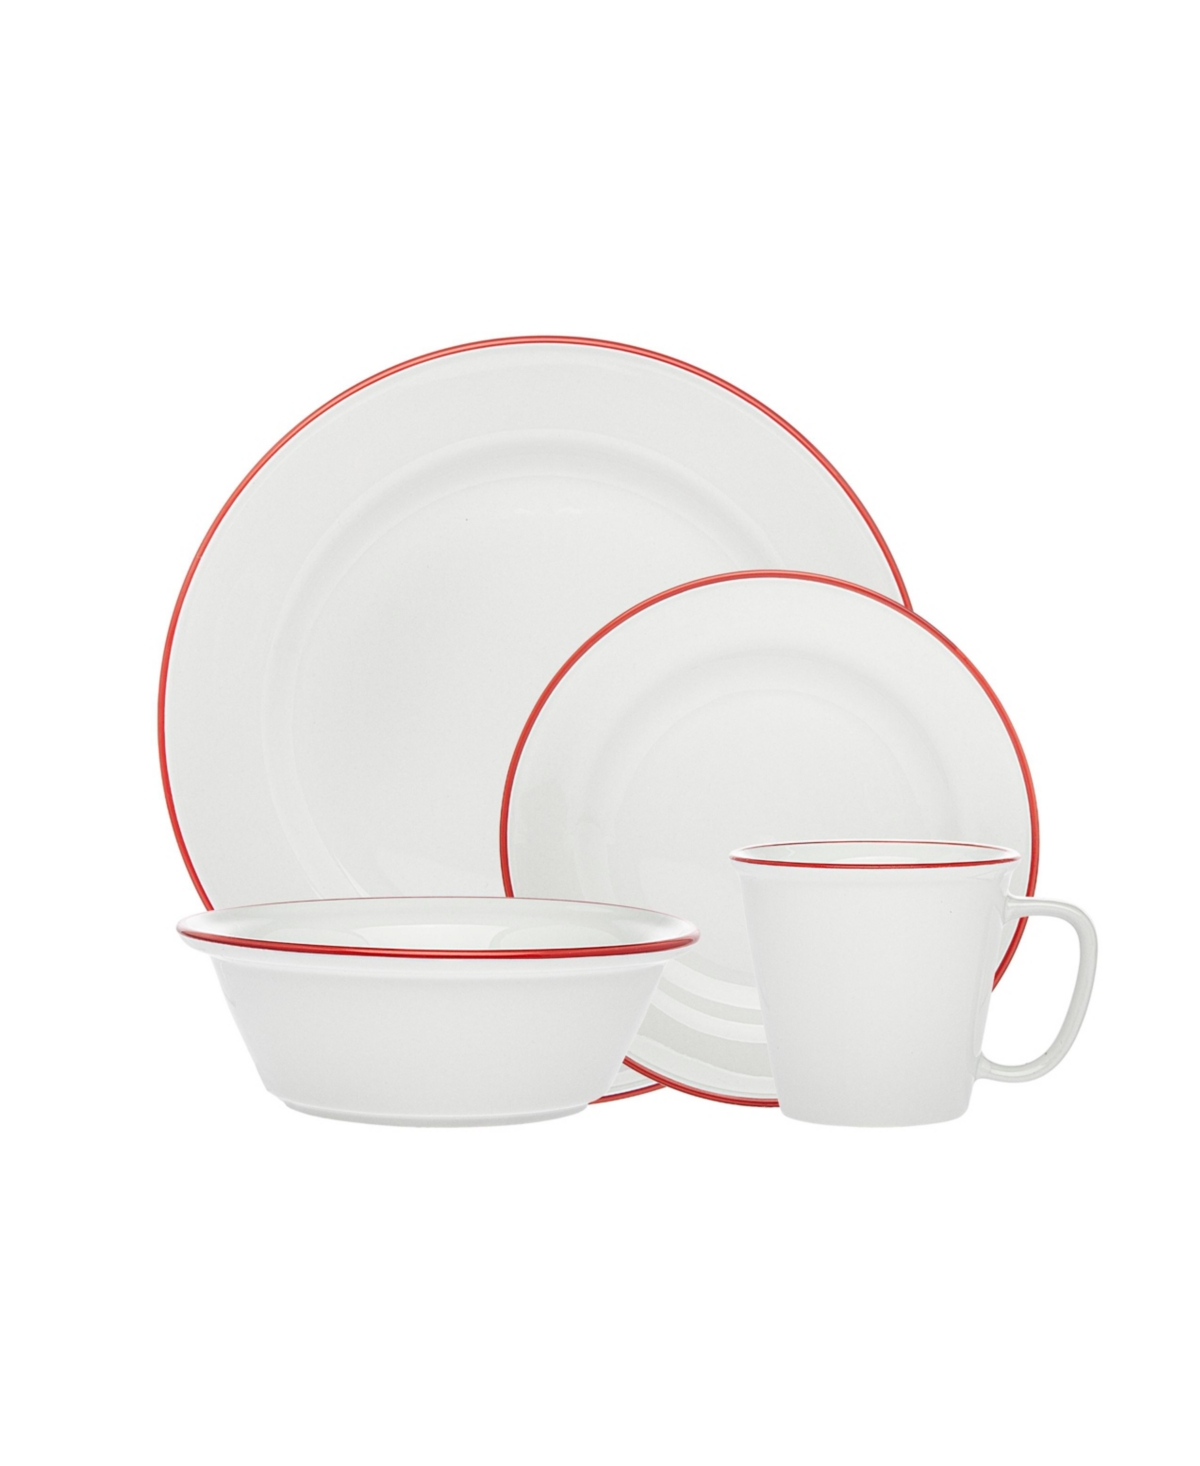 Bistro Red Band 16-pc Porcelain Dinnerware Set - White